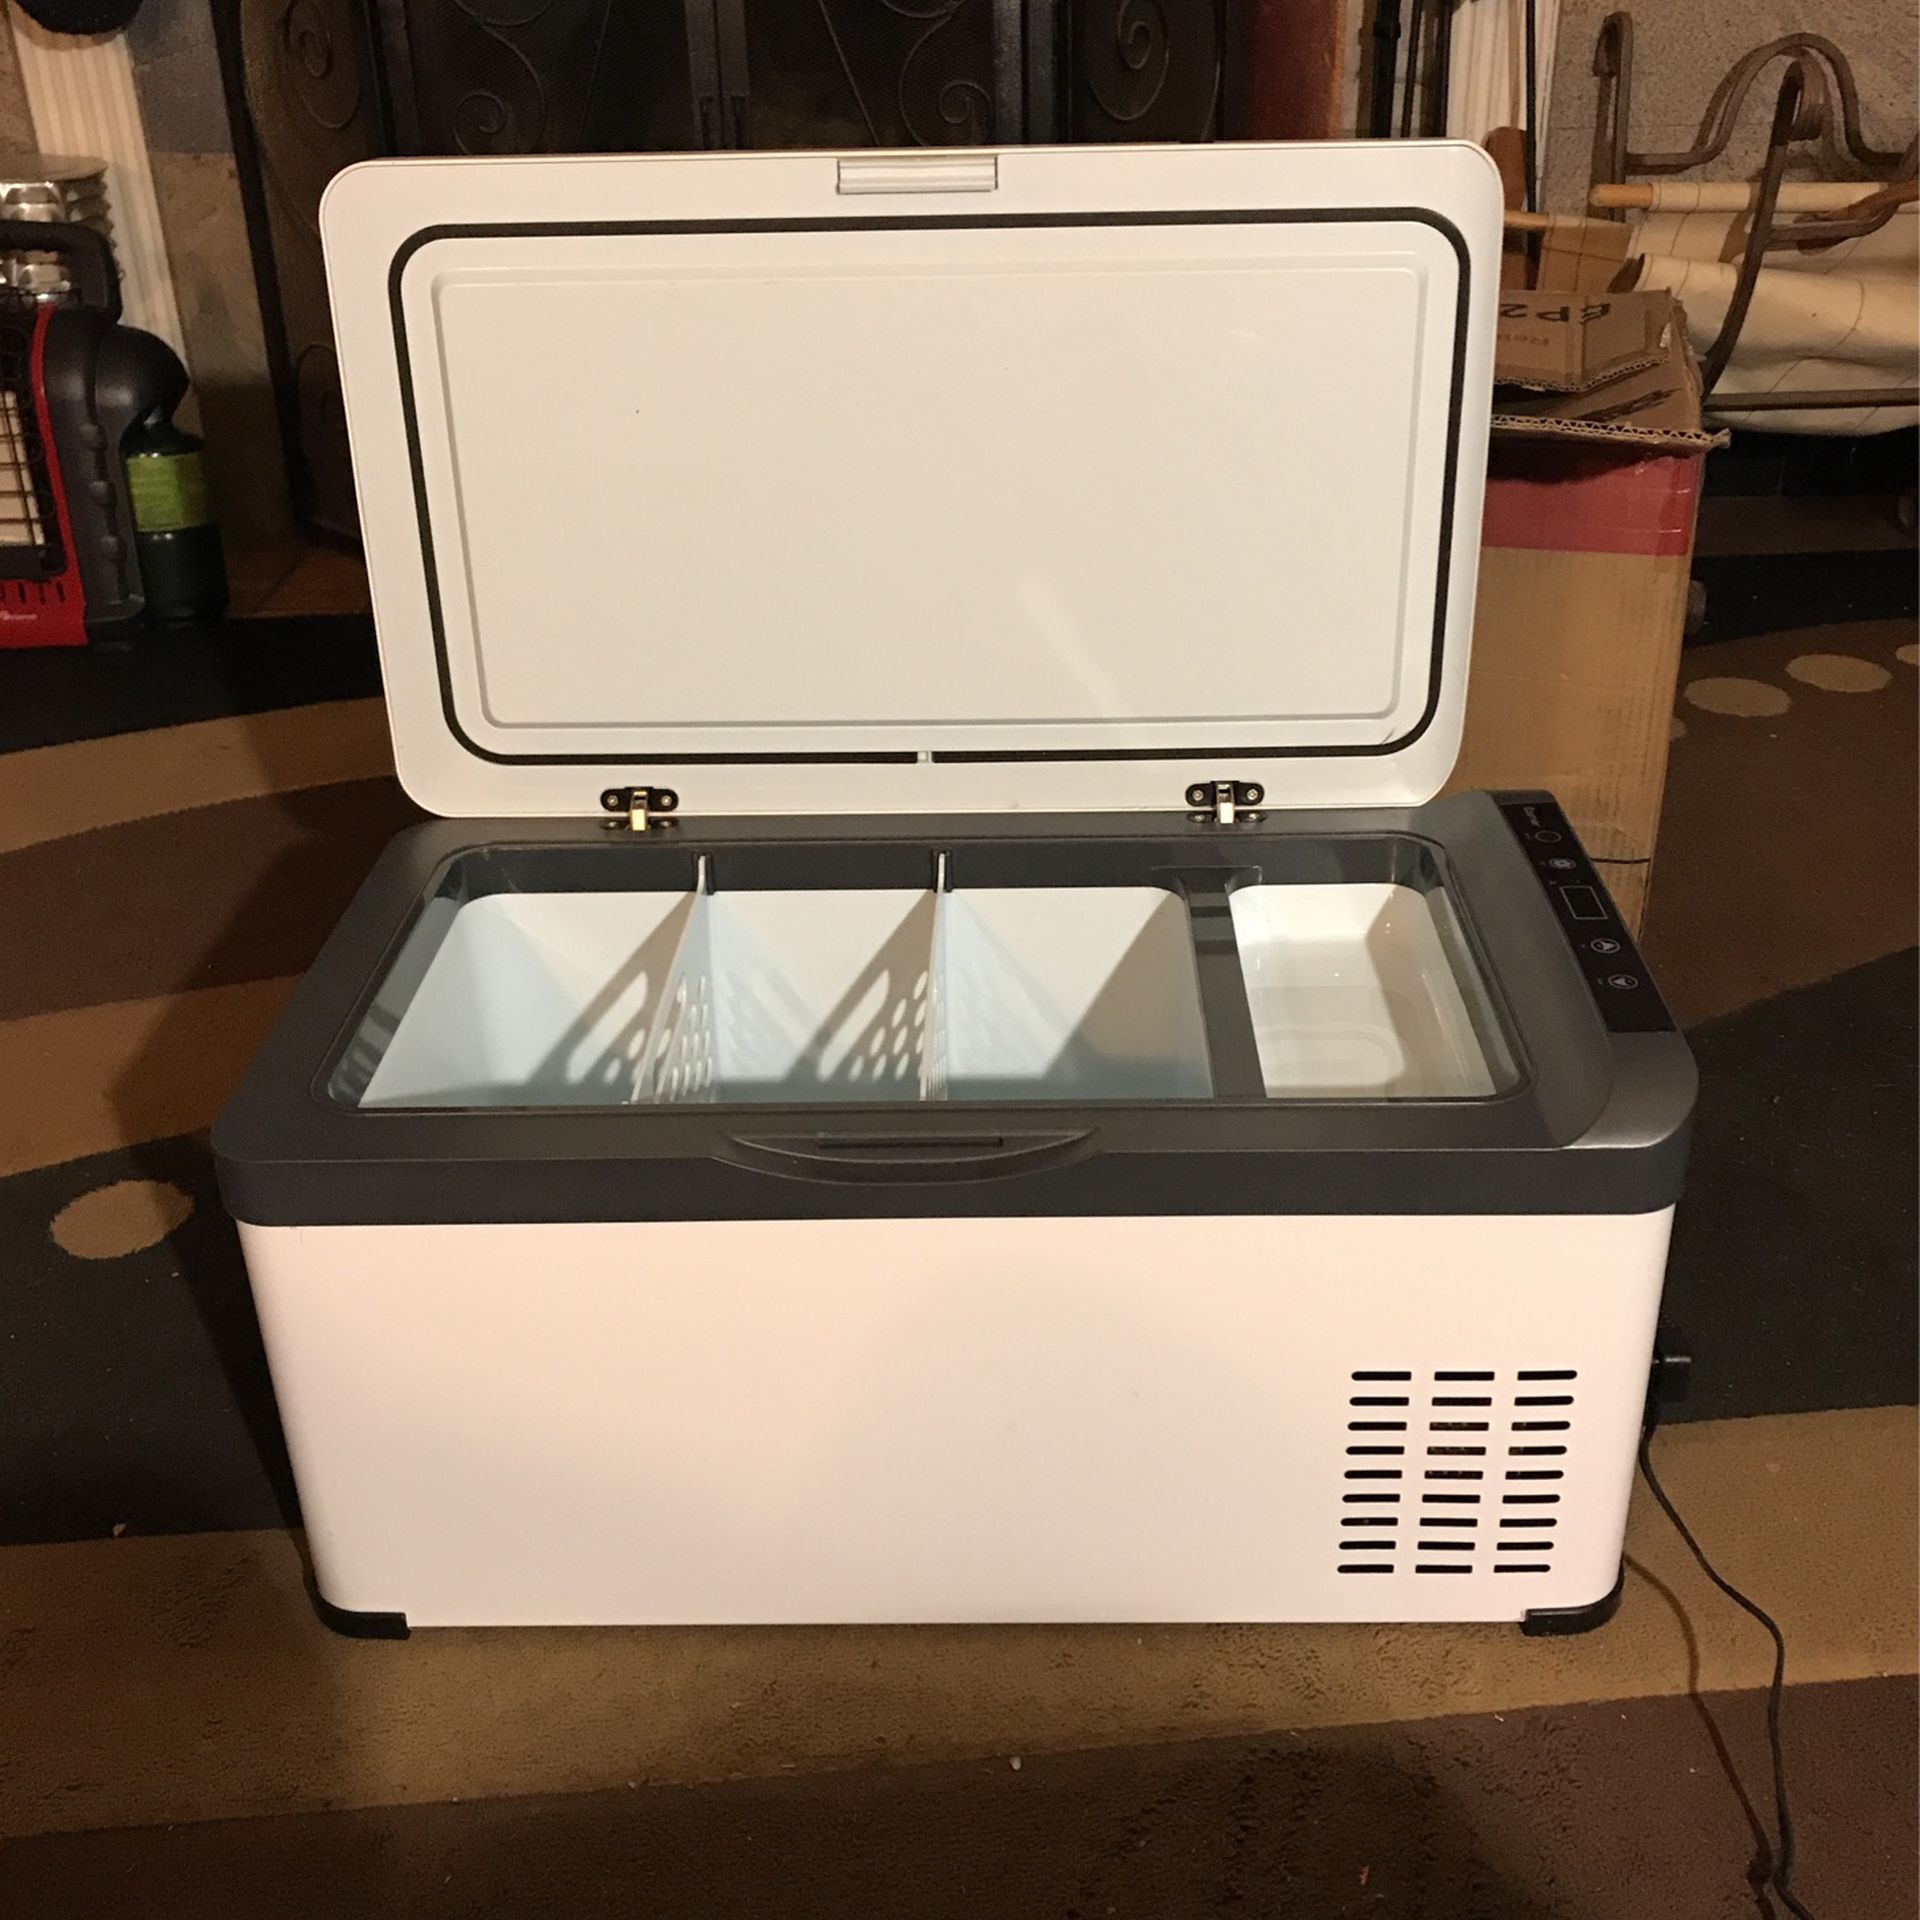 12 V/110 V mini compressor fridge/freezer cooler